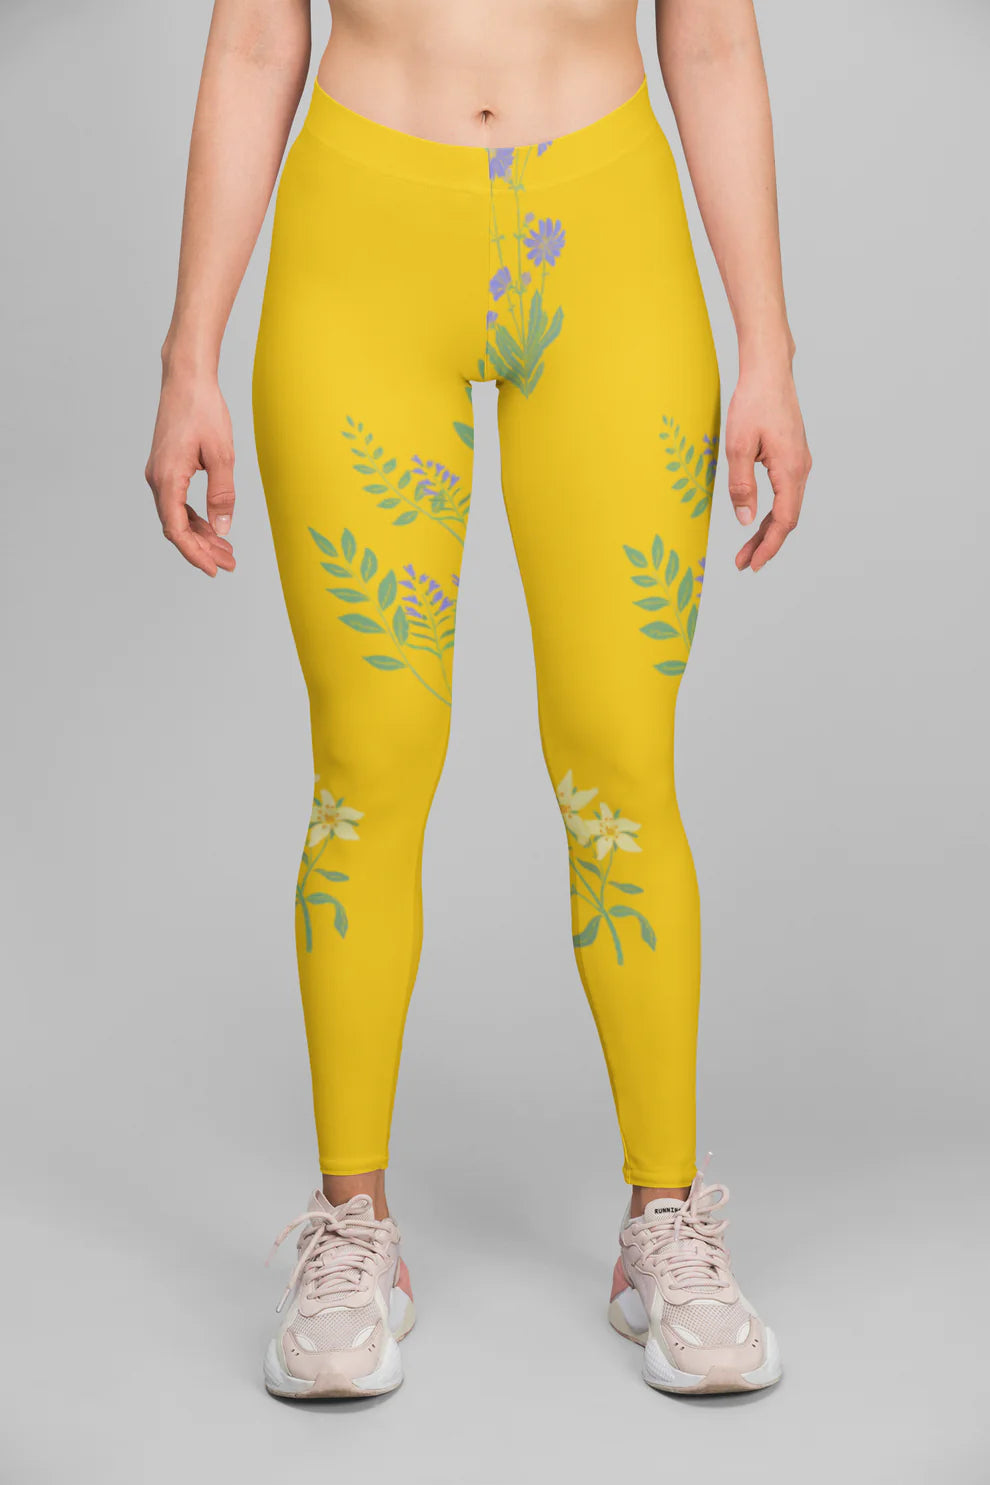 Sunflower Yellow Legging and Black T-shirt Bundle